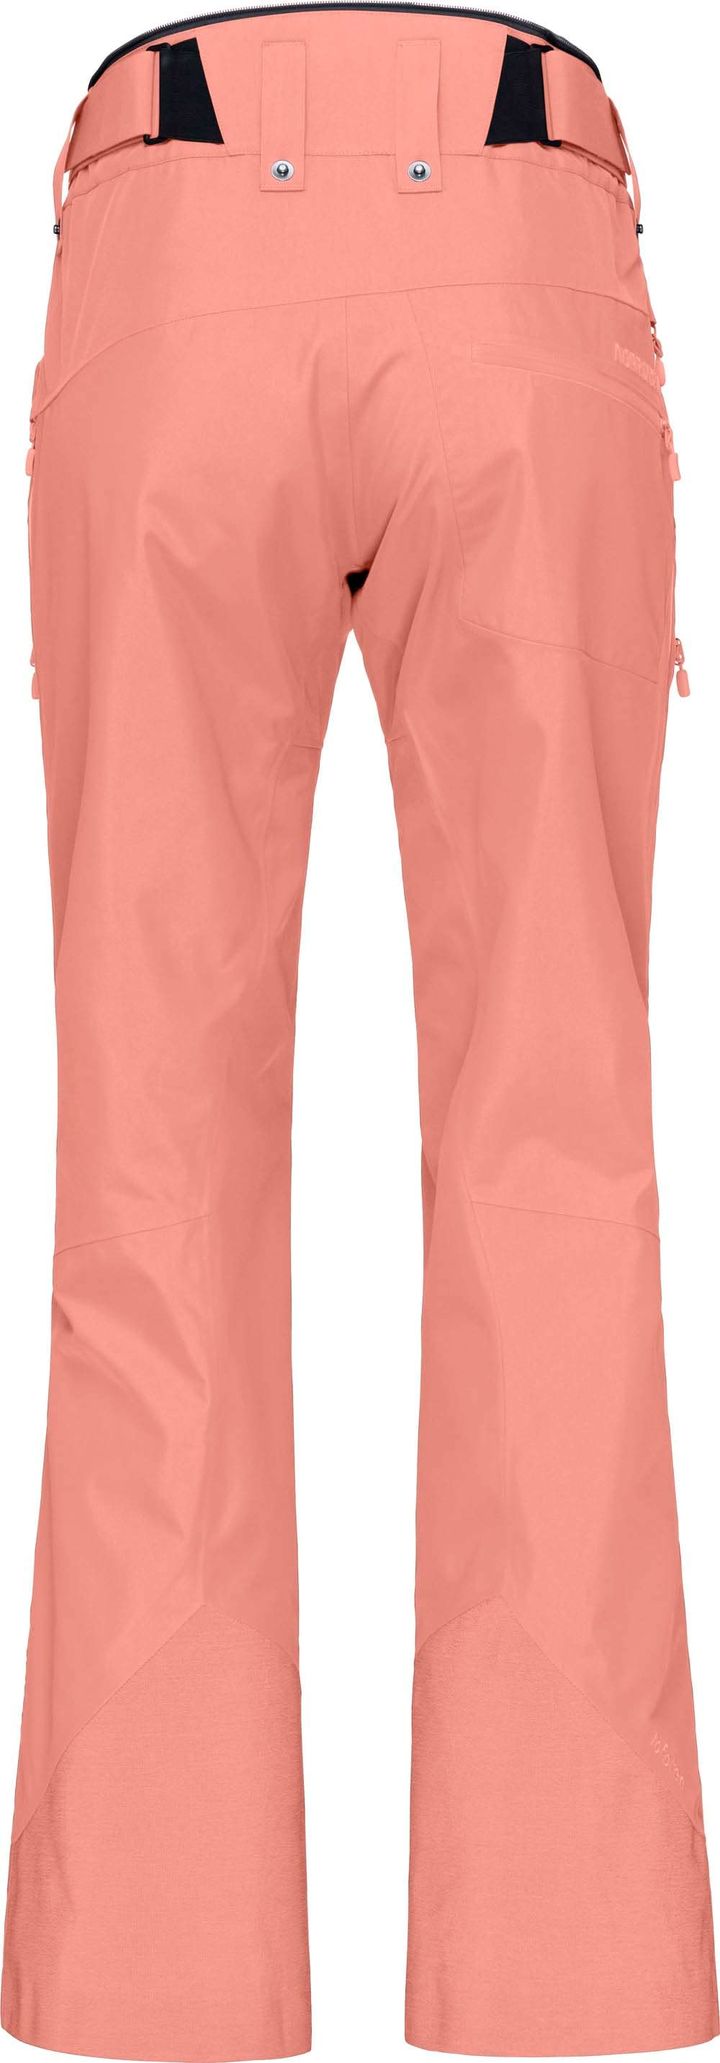 Women's Lofoten GORE-TEX Insulated Pants Peach Amber Norrøna